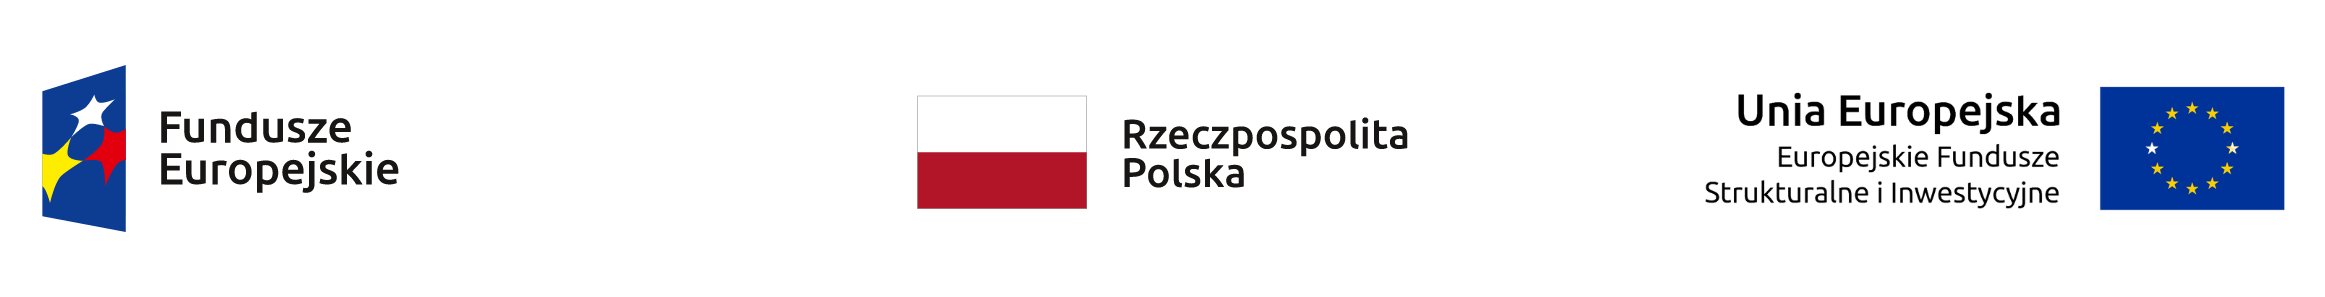 belka logotypy Unia Europejska, flaga Polski oraz logo EFS